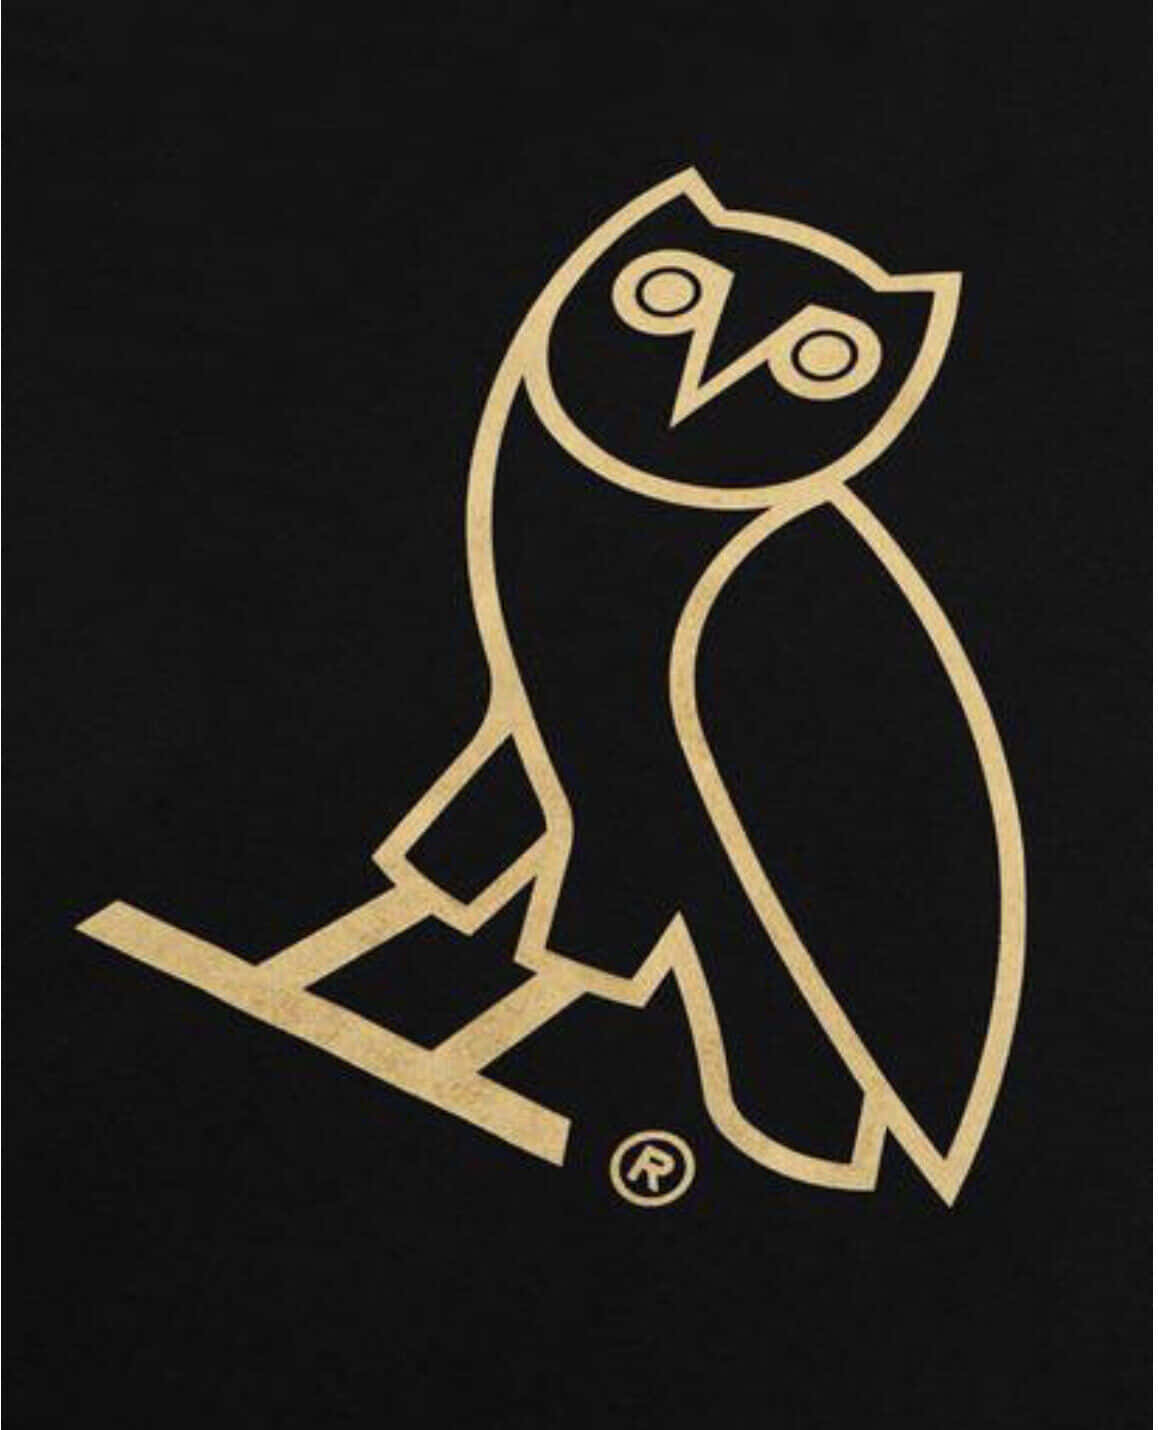 Drake OVO owl eyes glowing in the dark. Wallpaper